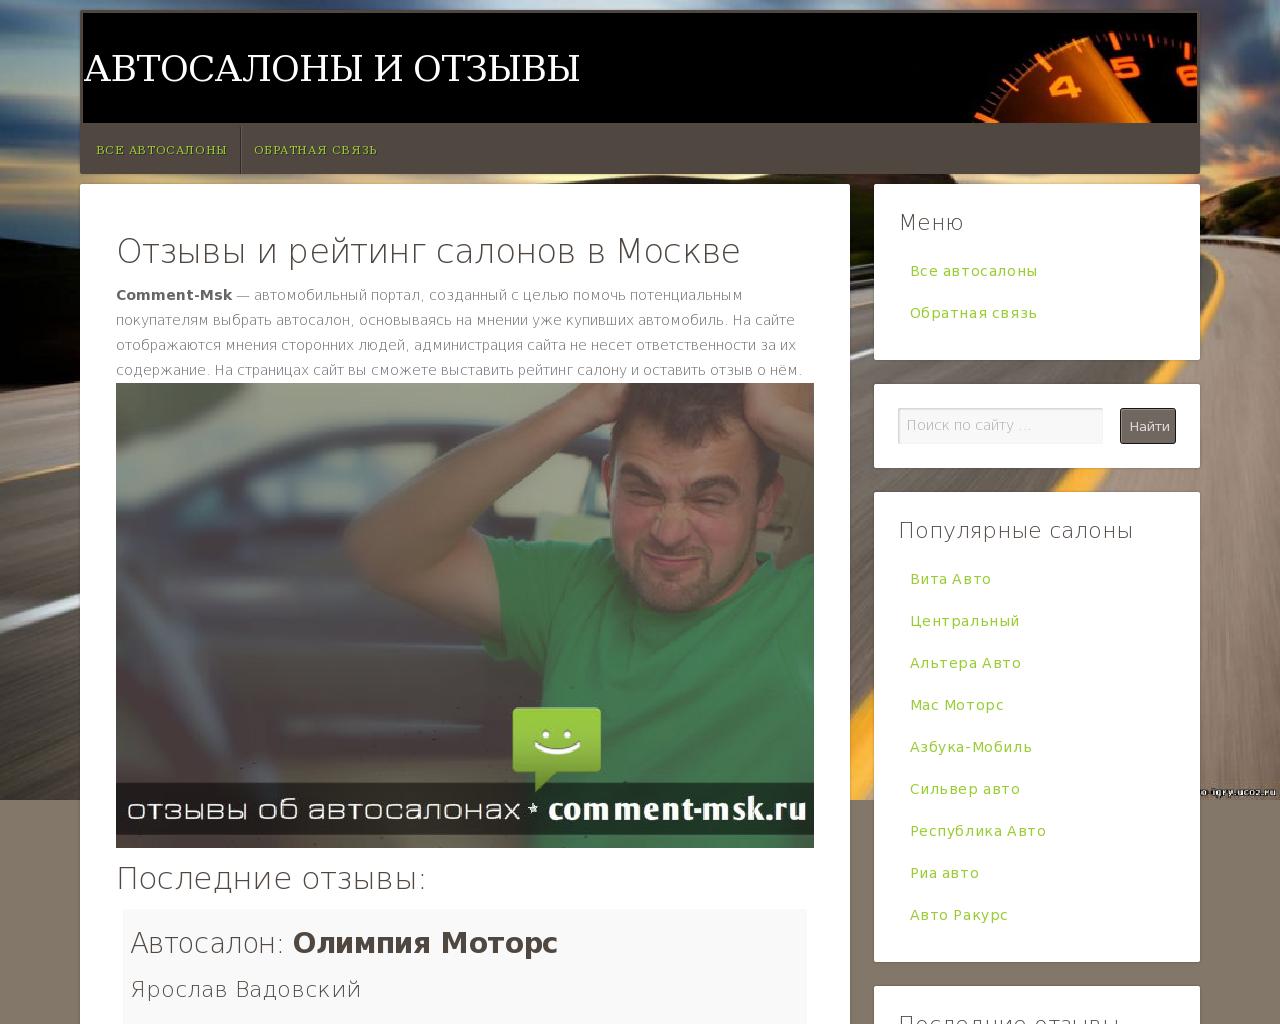 Изображение сайта comment-msk.ru в разрешении 1280x1024